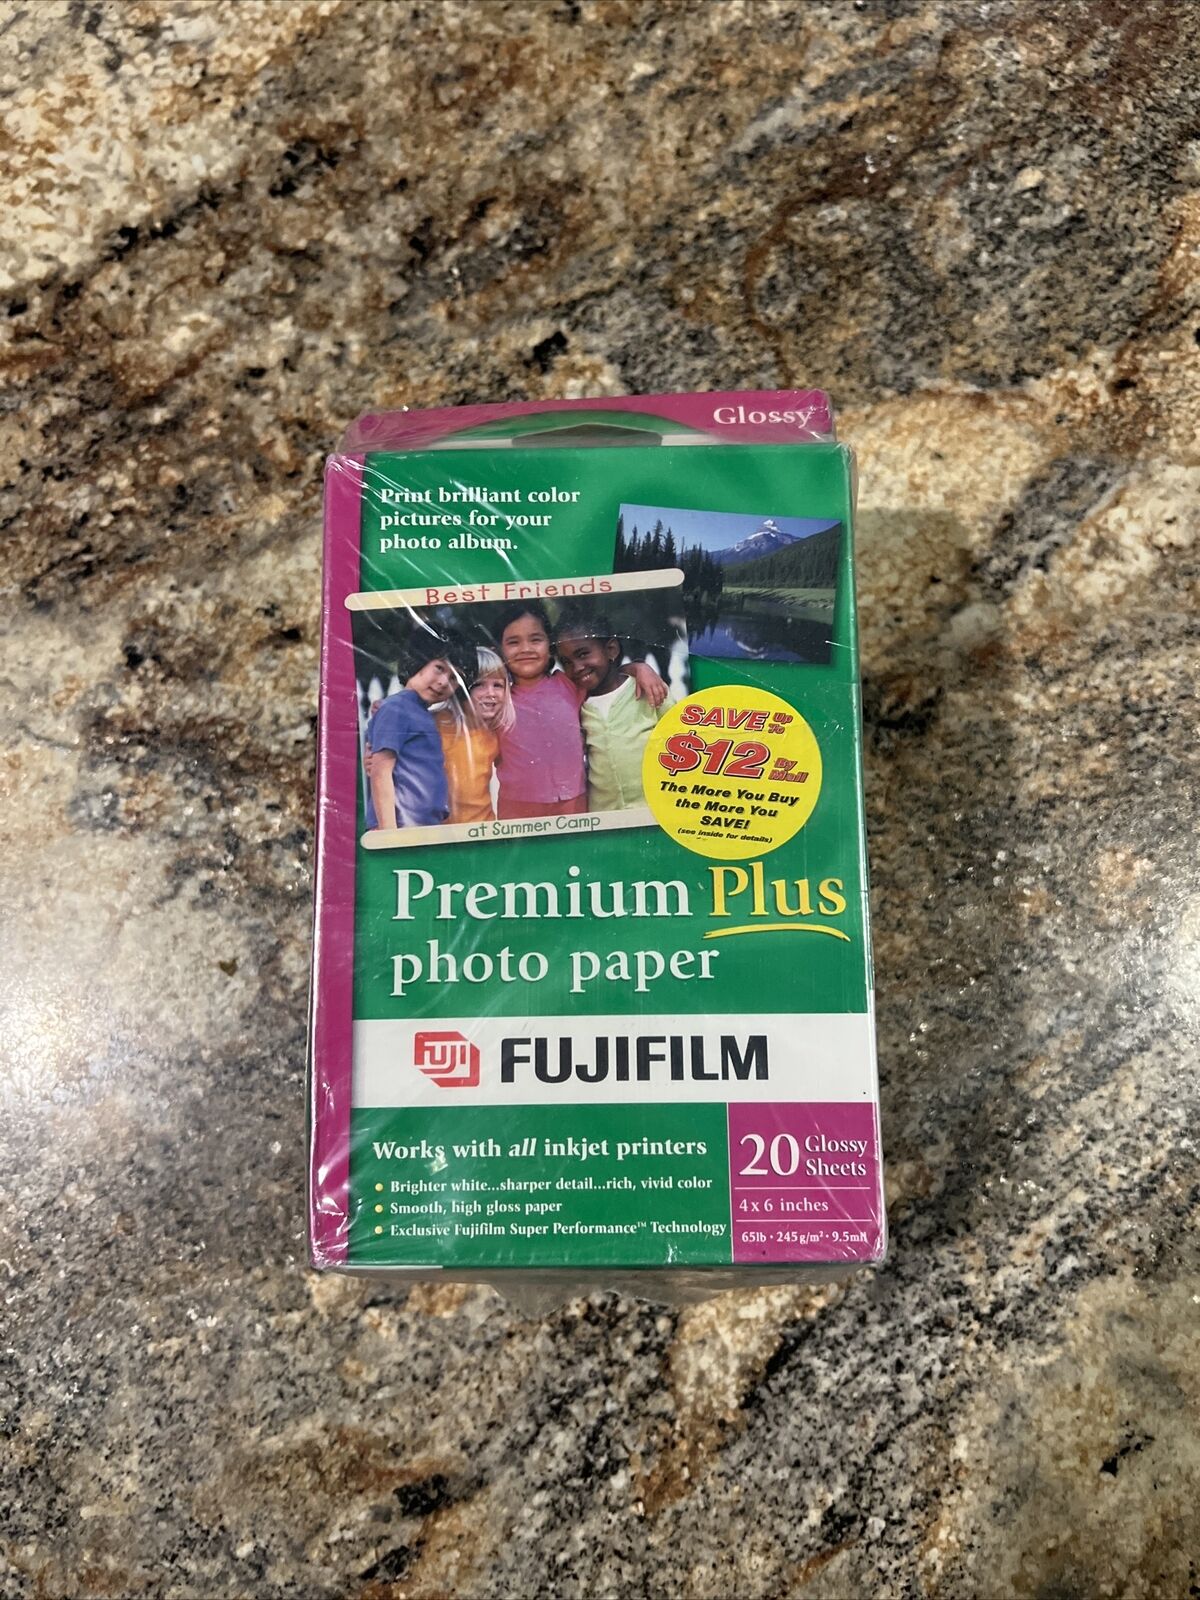 FUJIFILM Premium Plus Glossy Photo Paper (200 Count) NEW AND SEALED